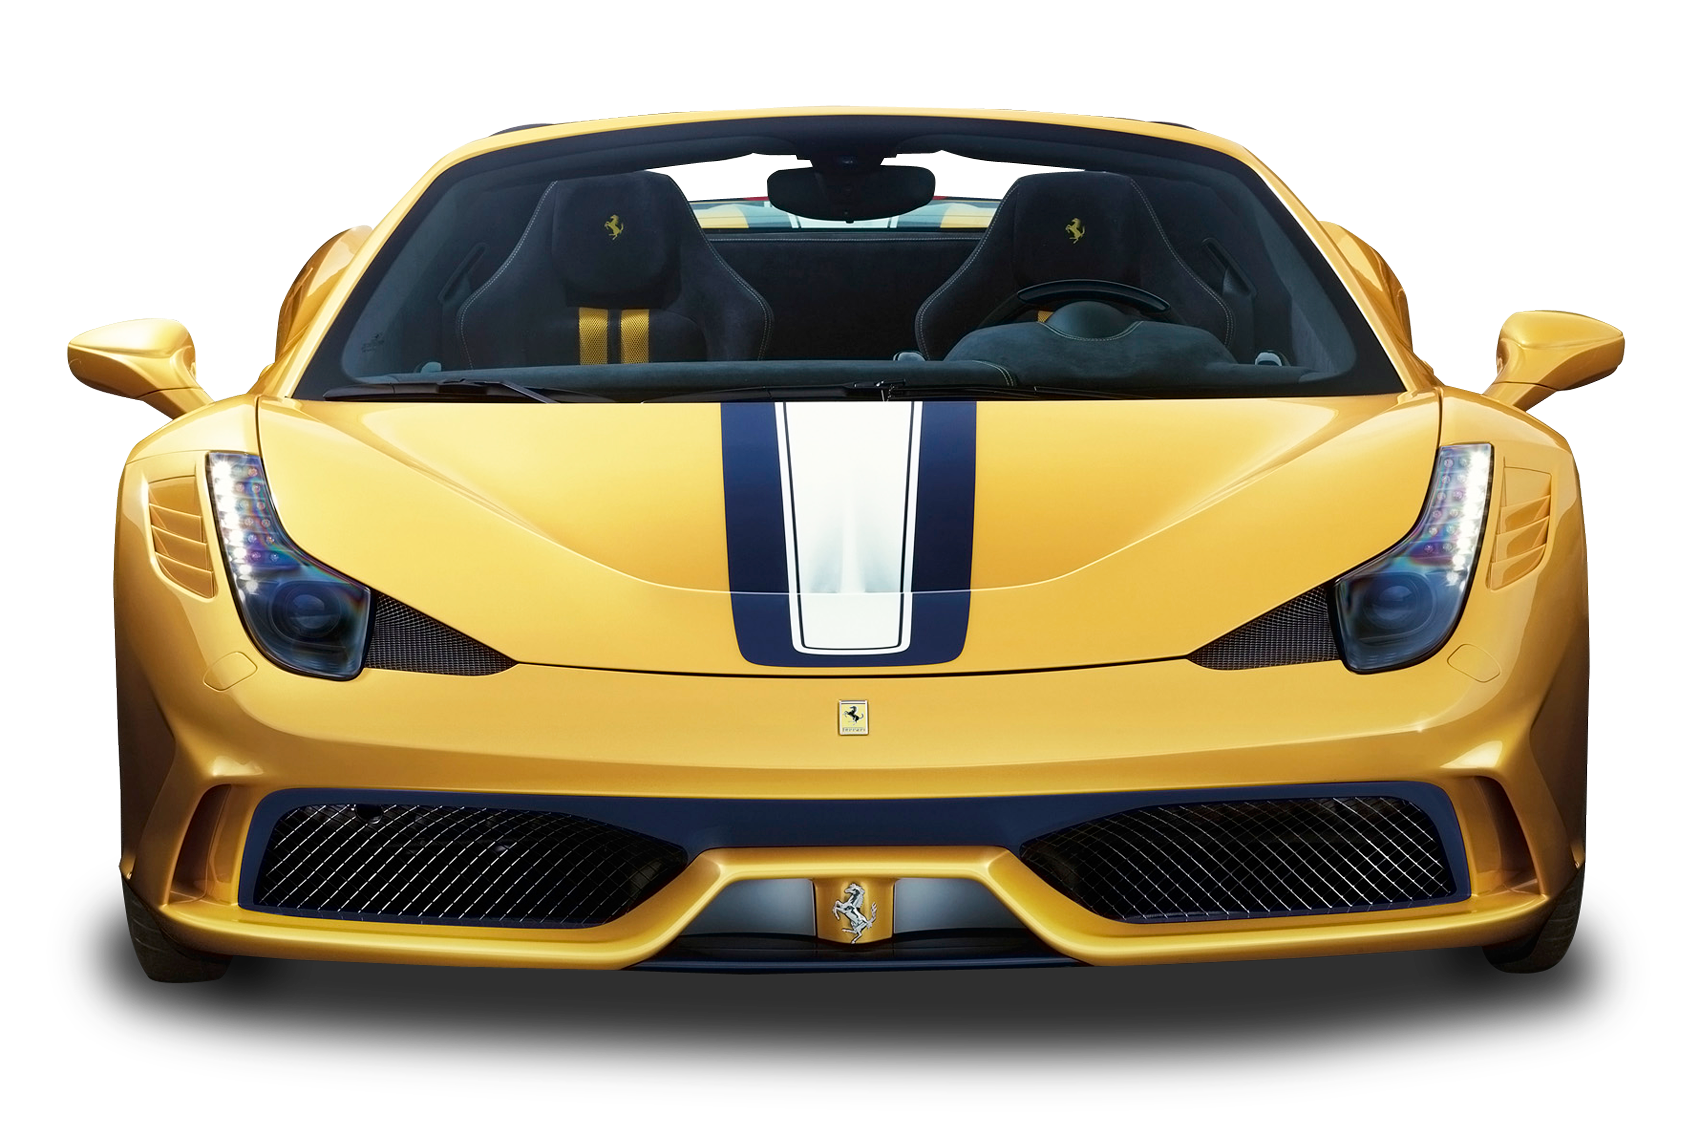 Yellow Ferrari Front View Car PNG Image - PurePNG | Free ...